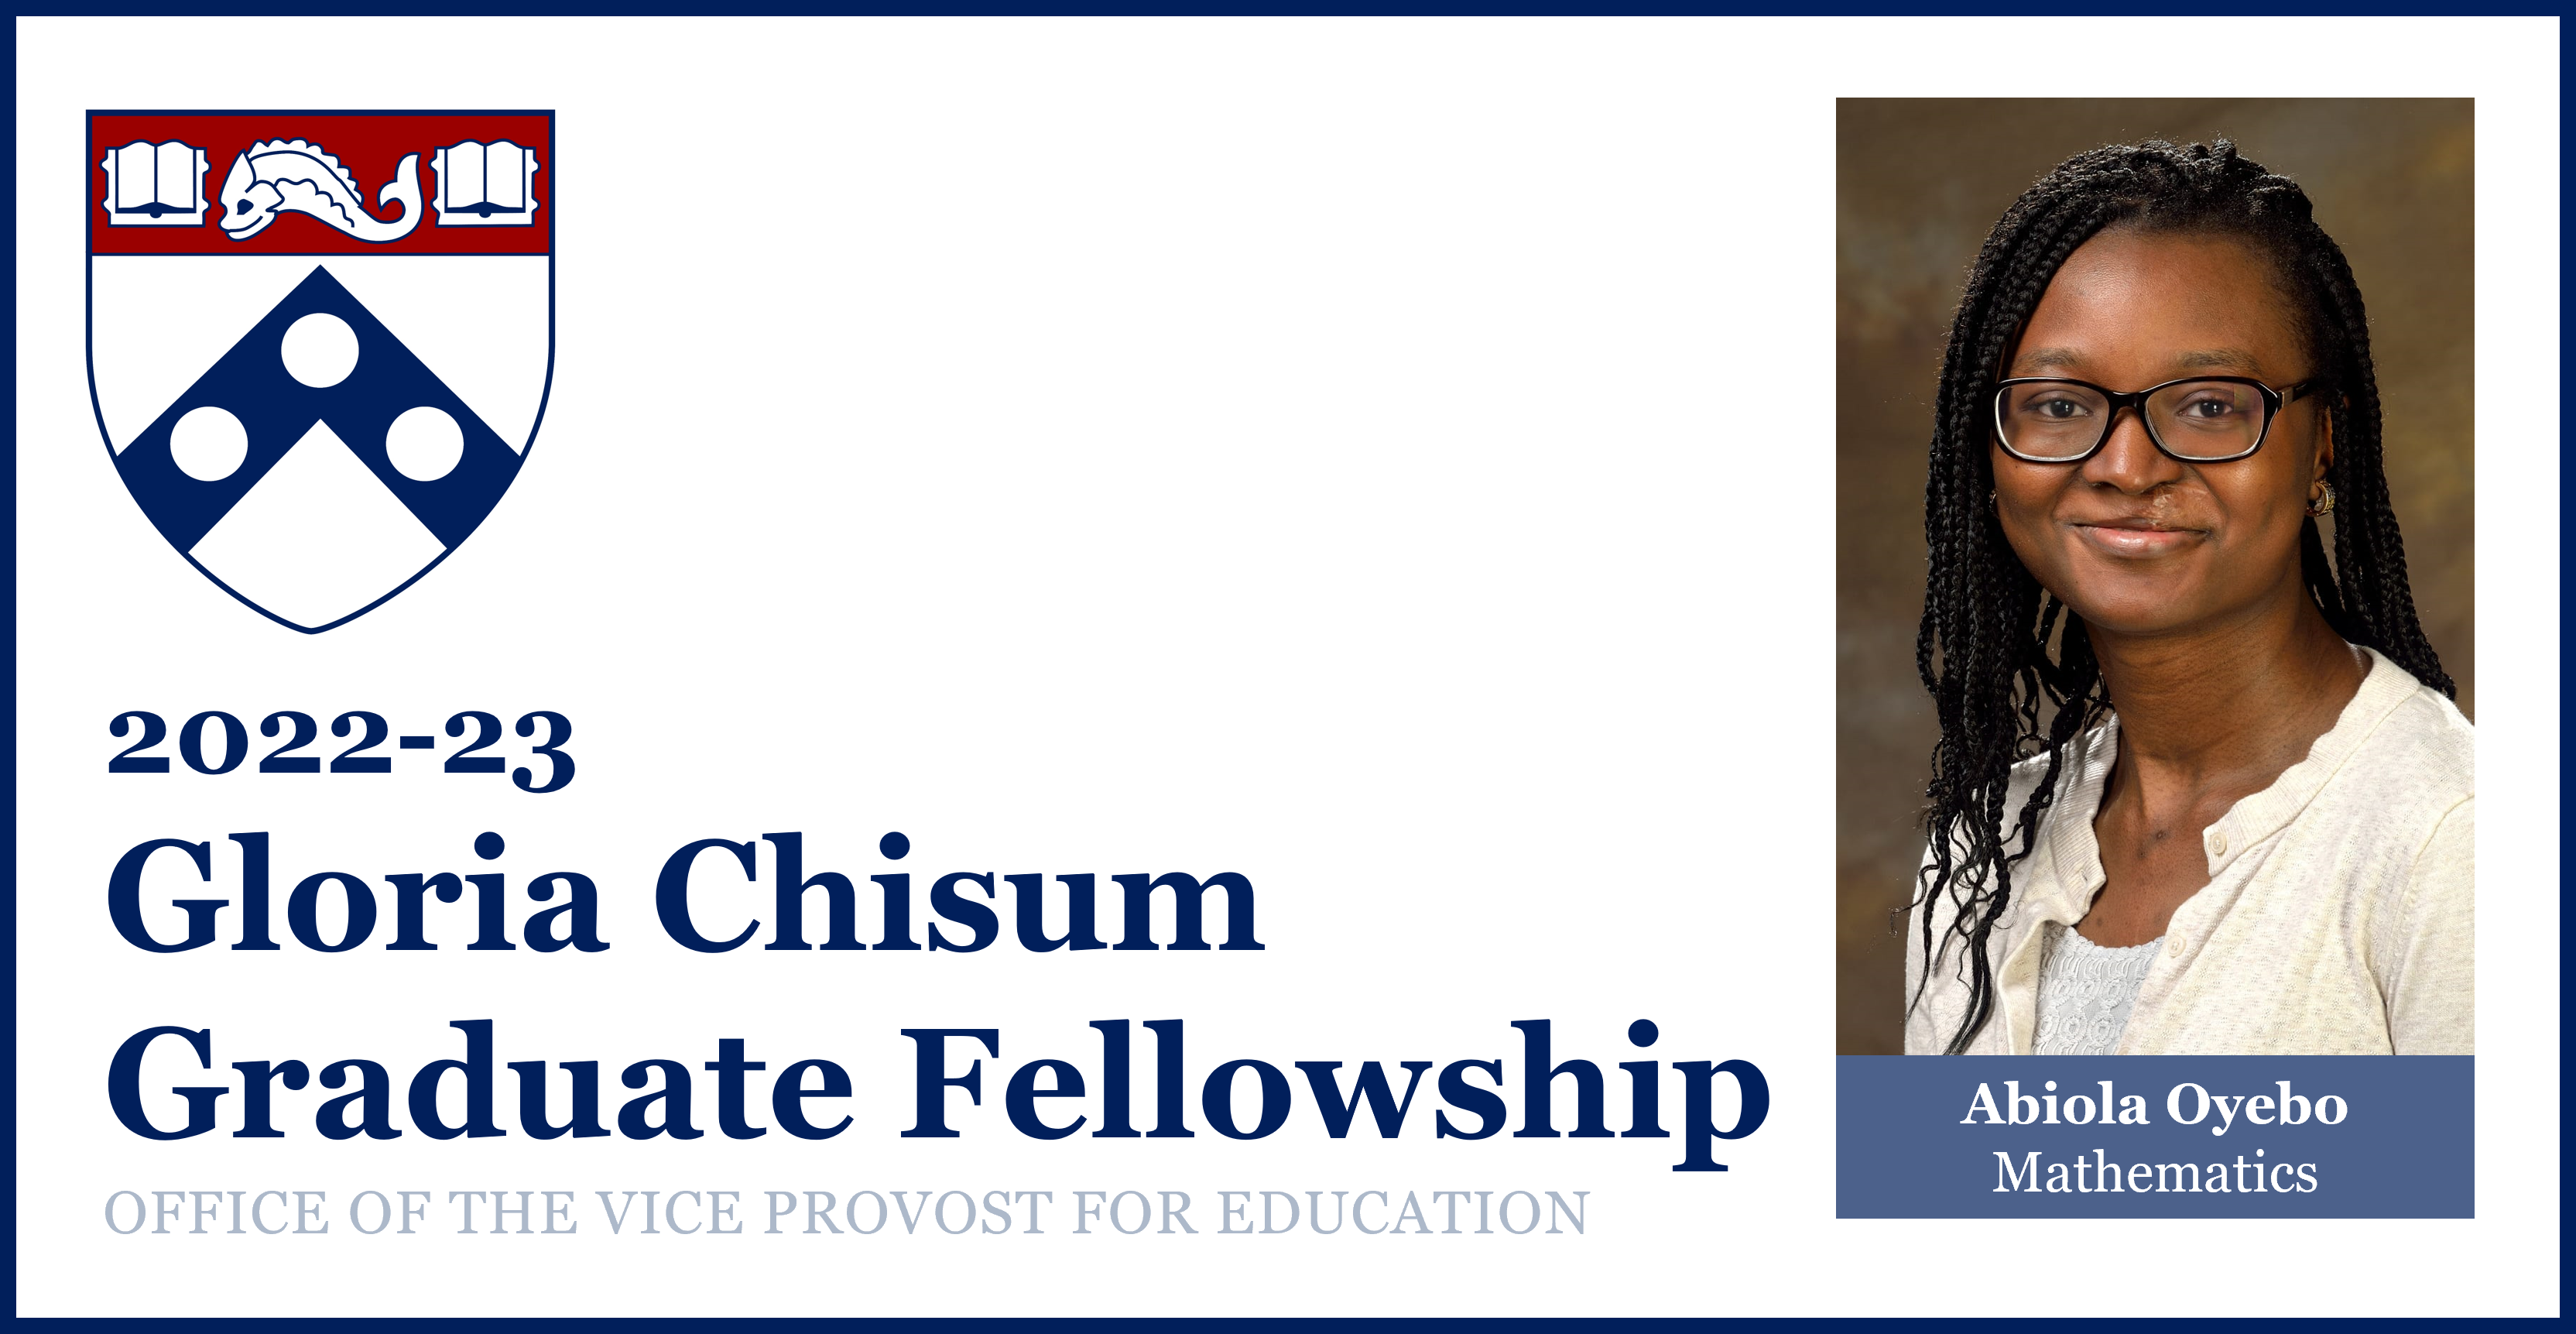 PhD student Abiola Oyebo named 2022 Chisum Fellow 